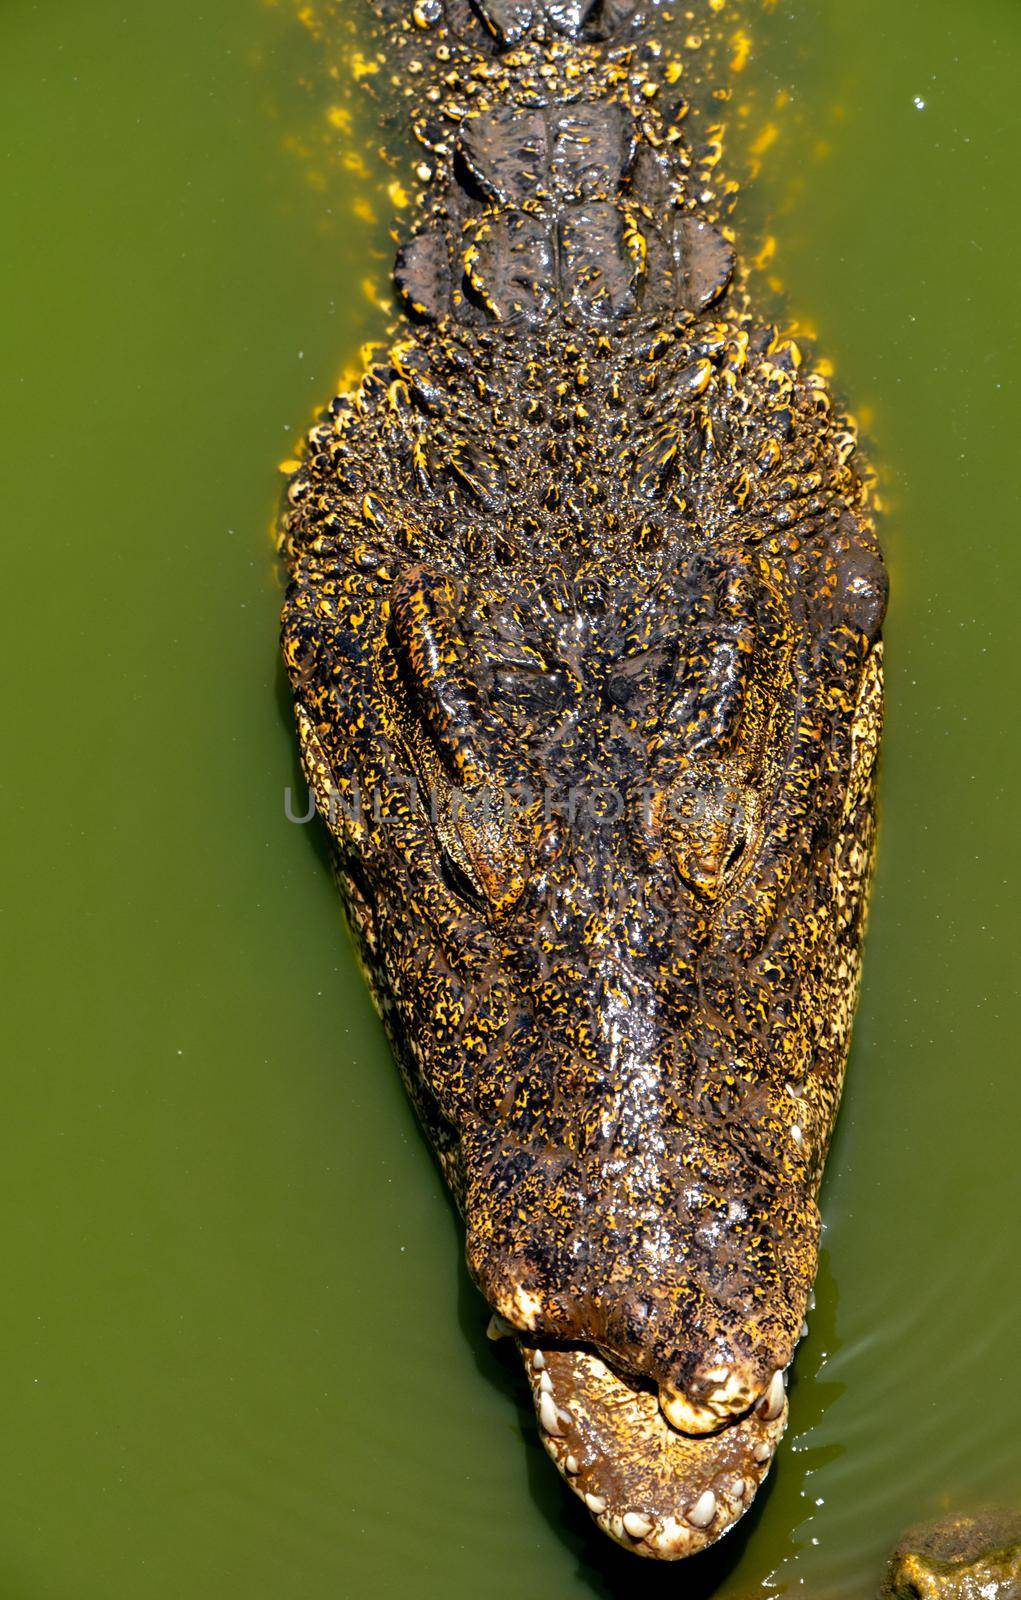 Crocodile or alligator close-up portrait Shallow DOF. Wildlide and animal photos. Predators and reptiles